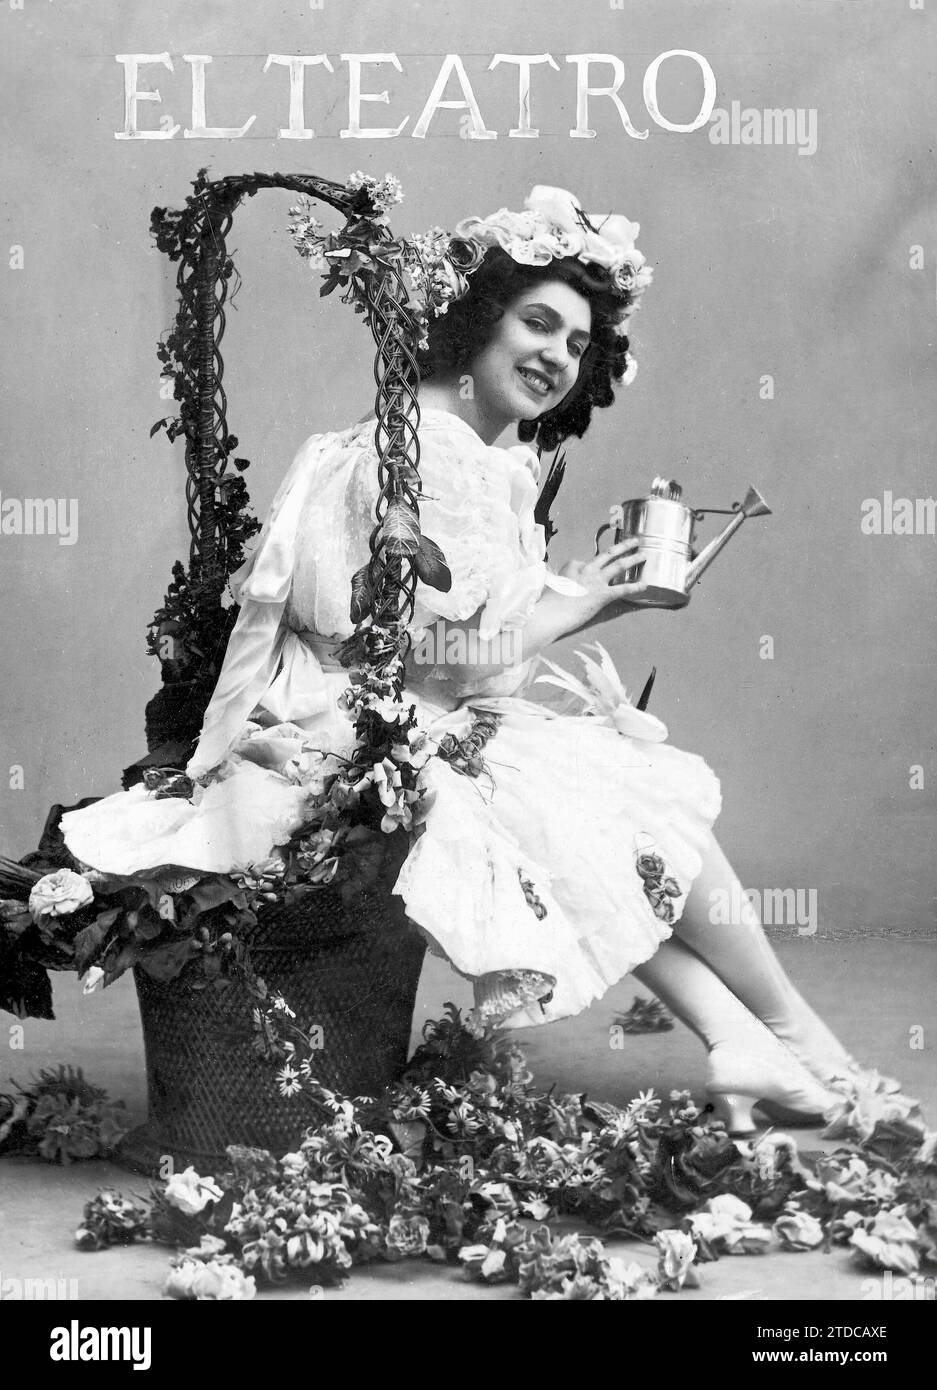 12/31/1909. Schauspielerin Julia Fons. Quelle: Album/Archivo ABC Stockfoto